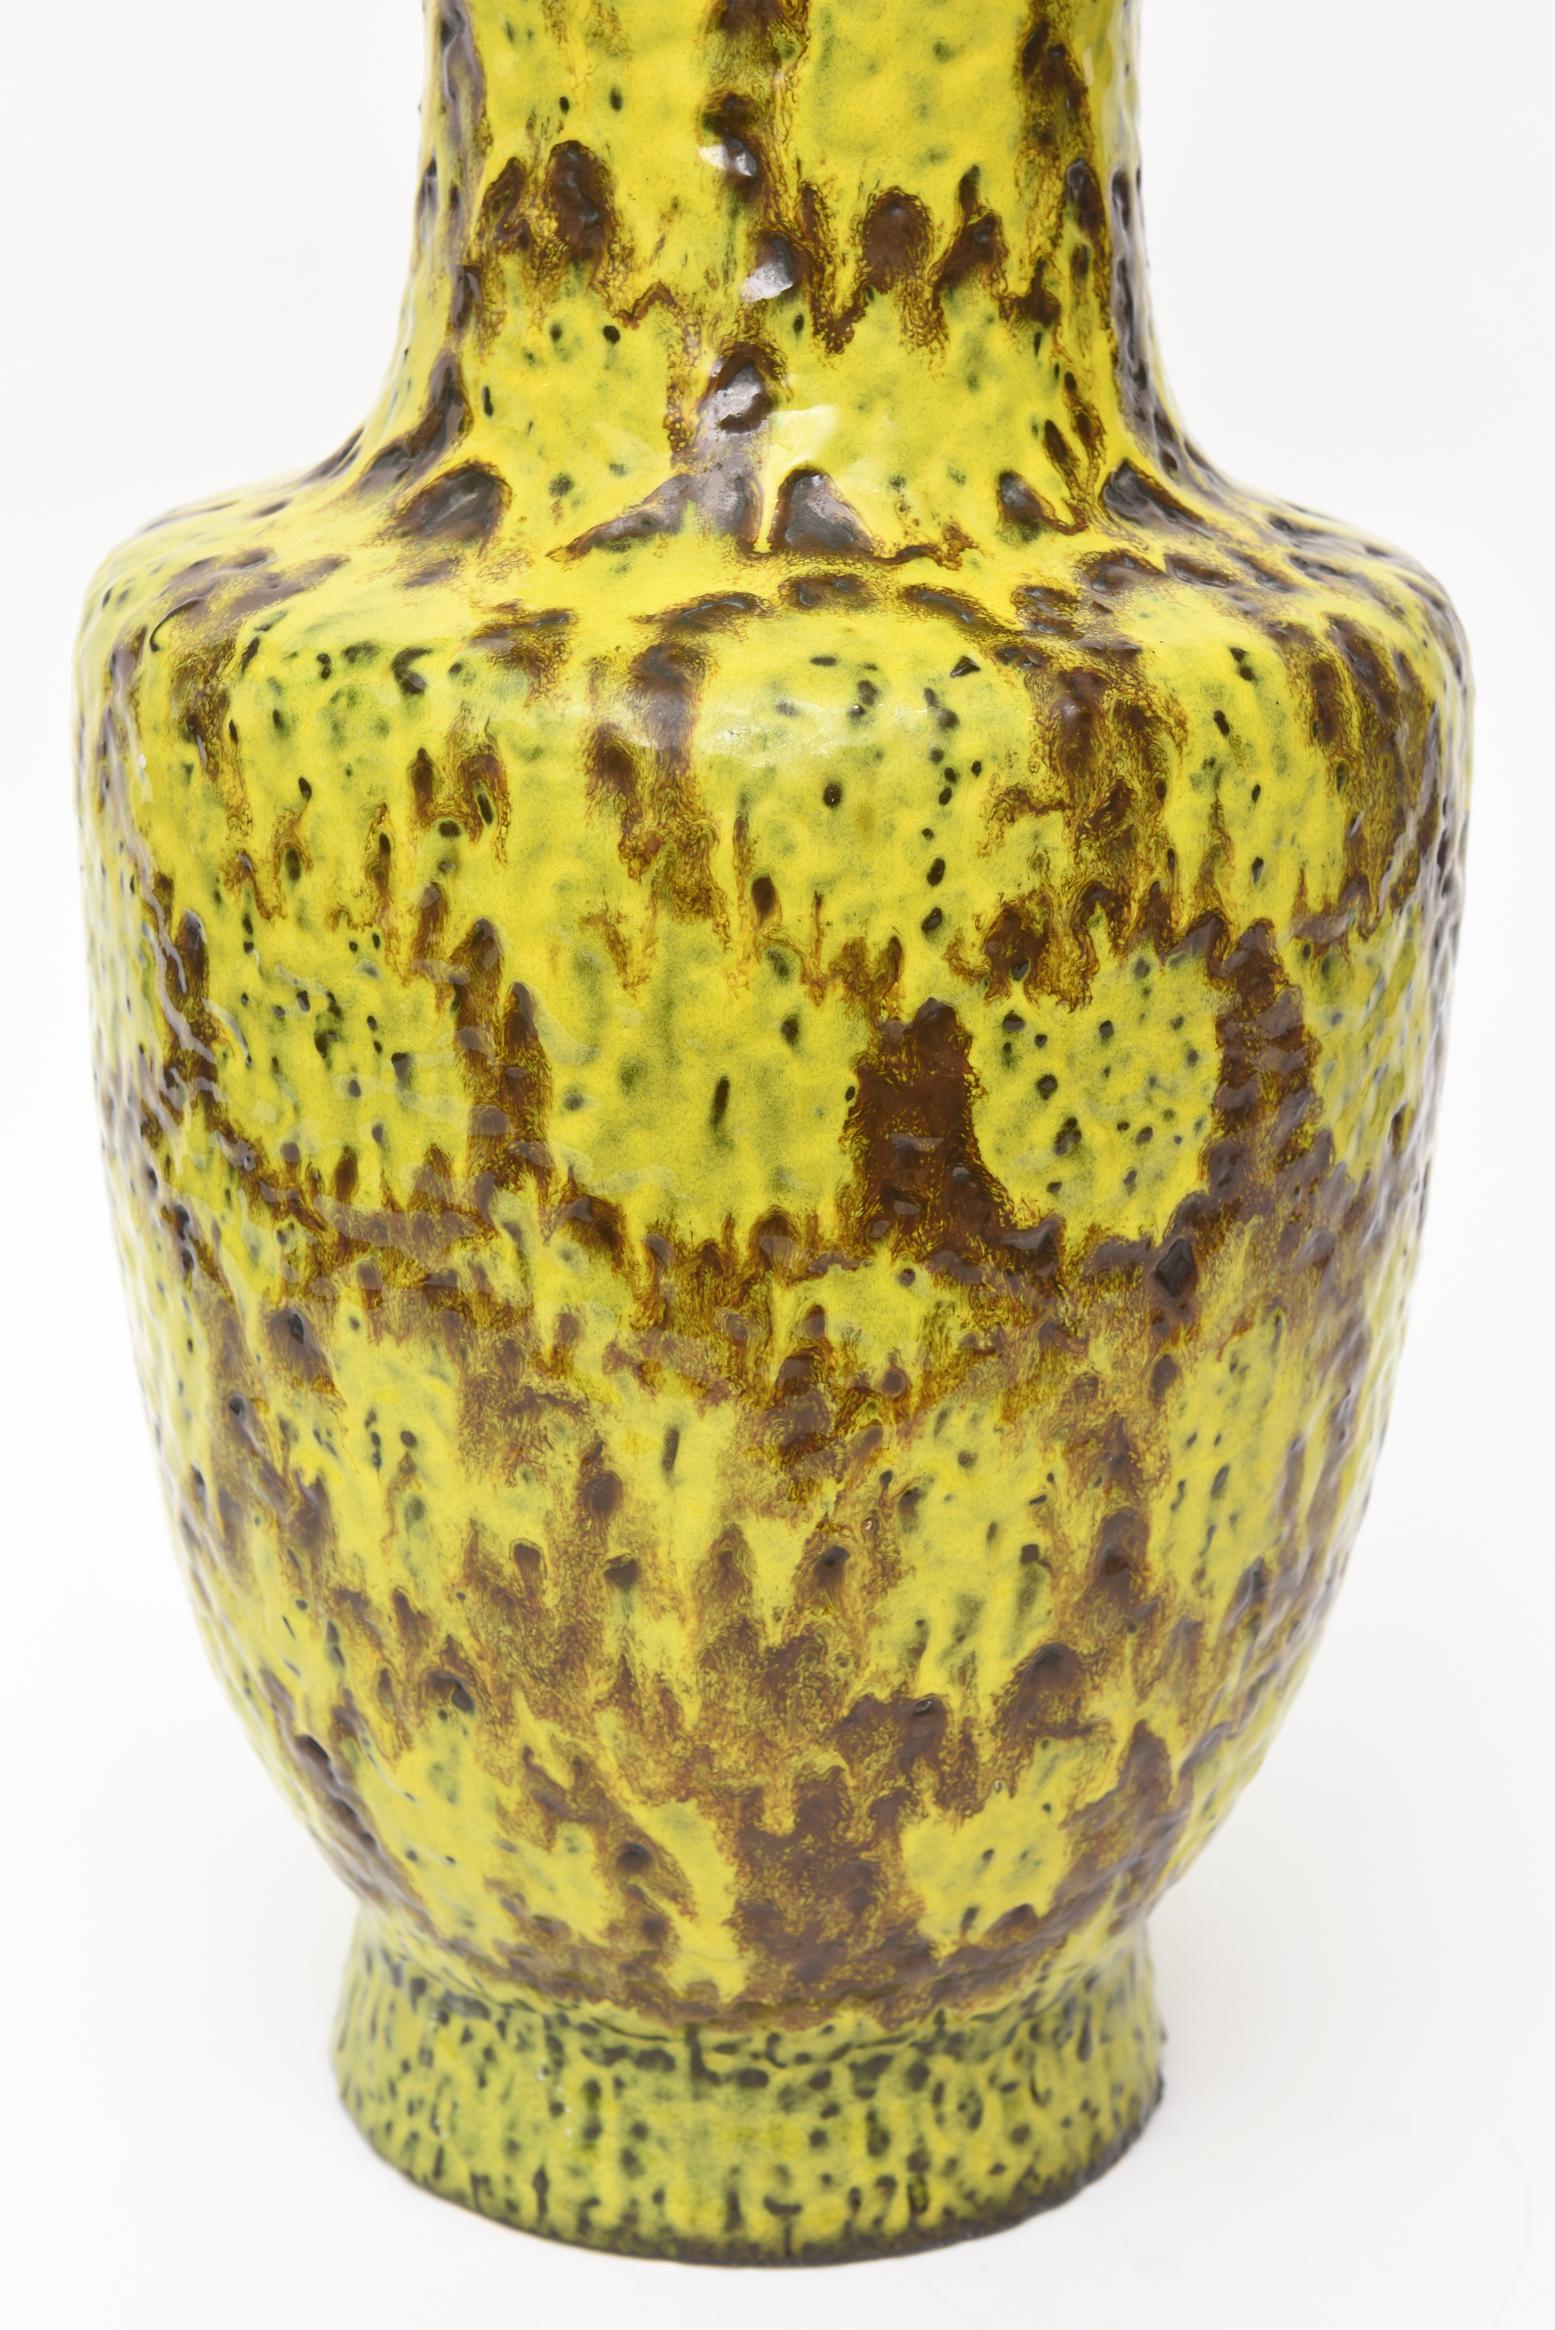 Glazed German Bay Keramik Fat Glaze Ceramic Mid-Century Modern Vase or Vessel